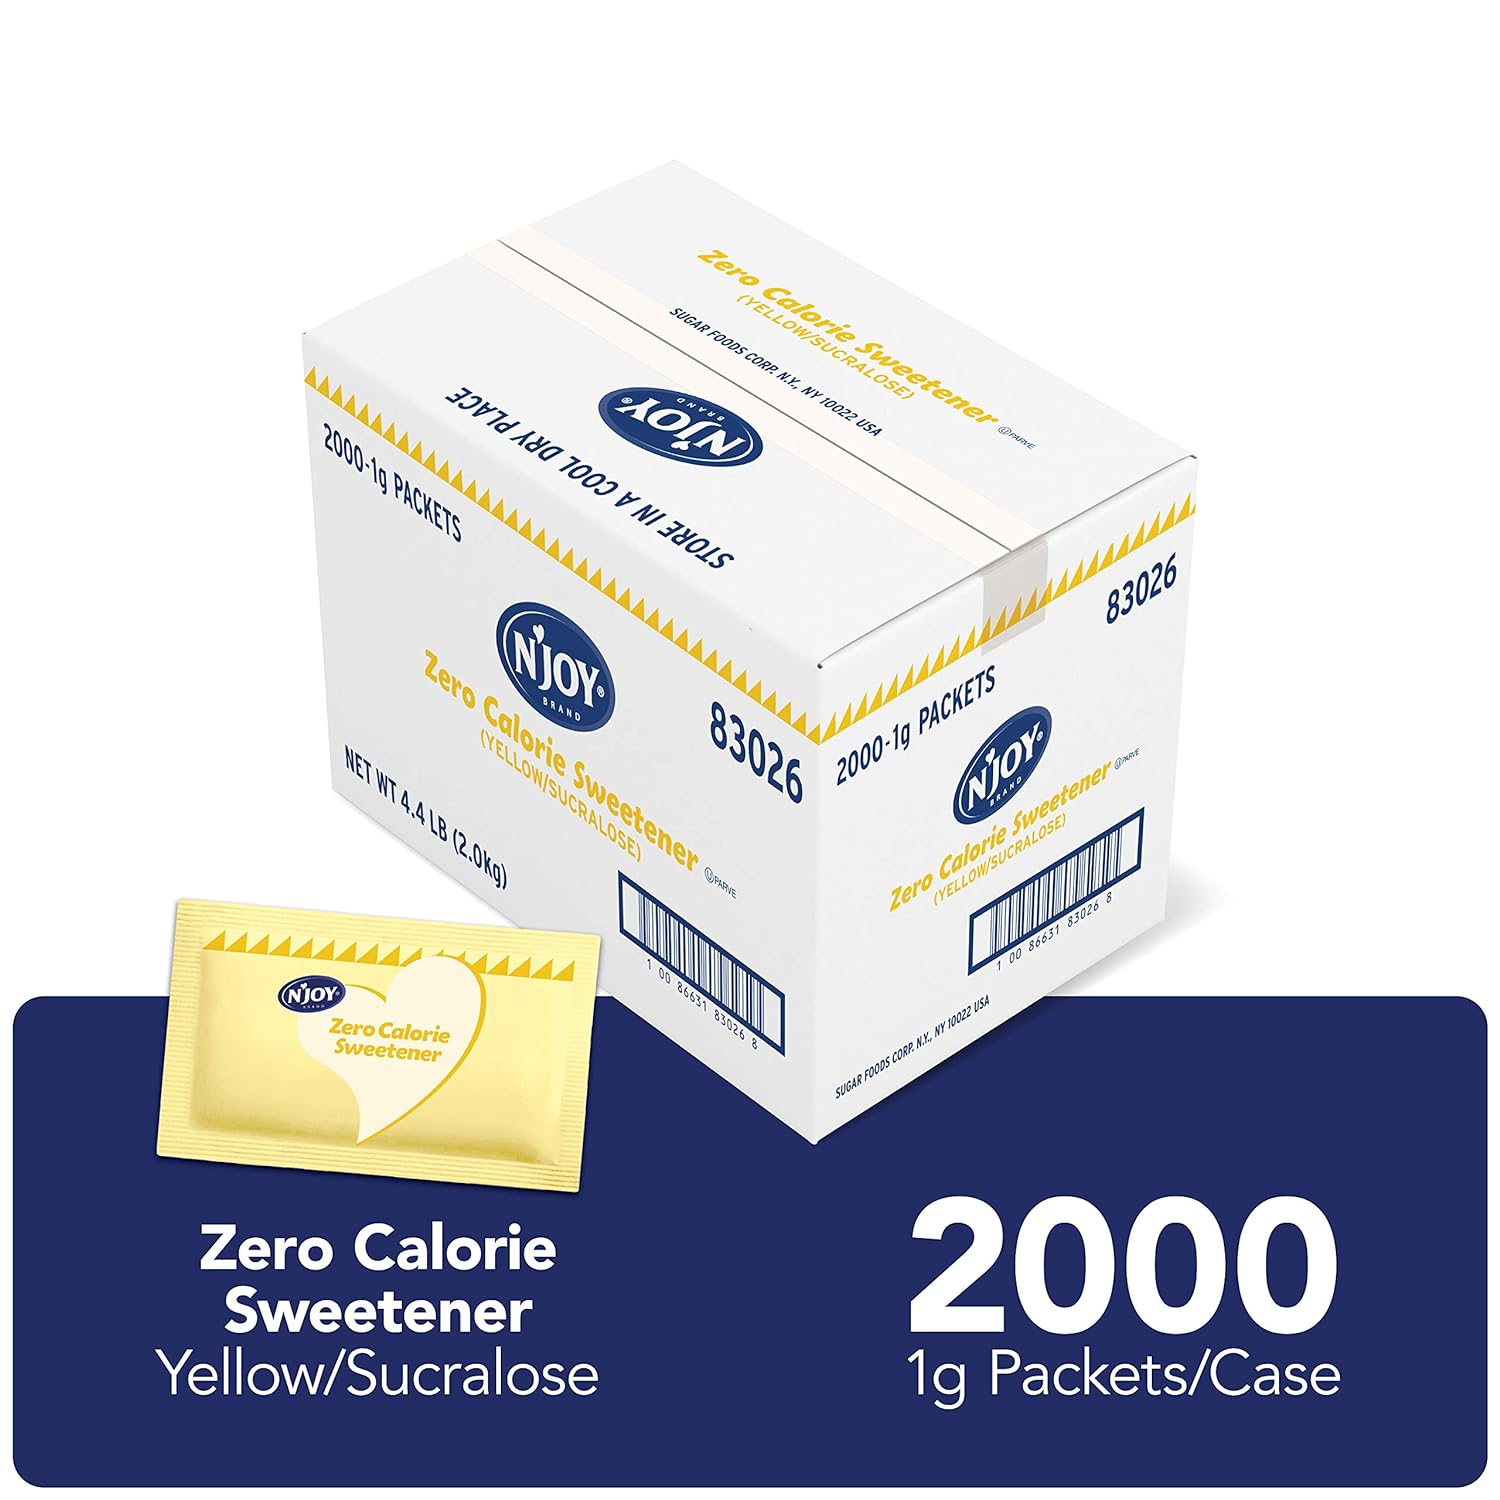 N'Joy Zero Calorie Sweetener | Yellow Sucralose Packets |2000 Count | Kosher | Gluten Free and Sodium Free, (83026)